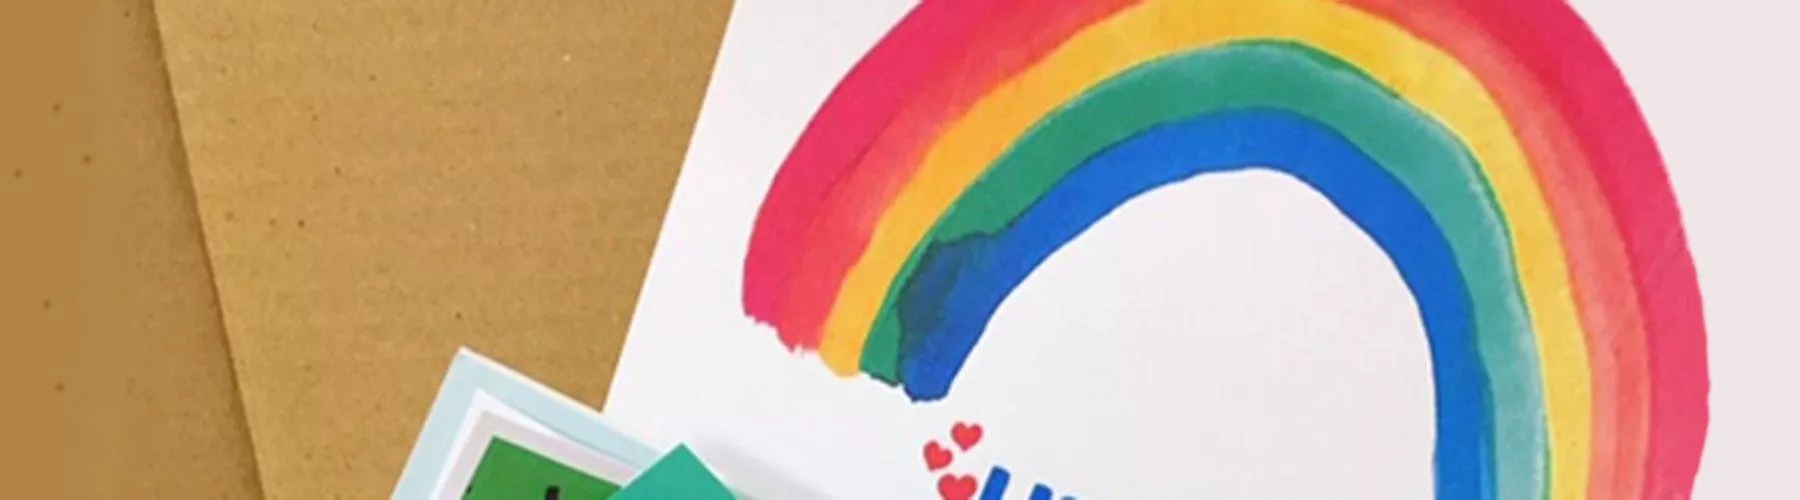 A handpainted rainbow in a cardboard box